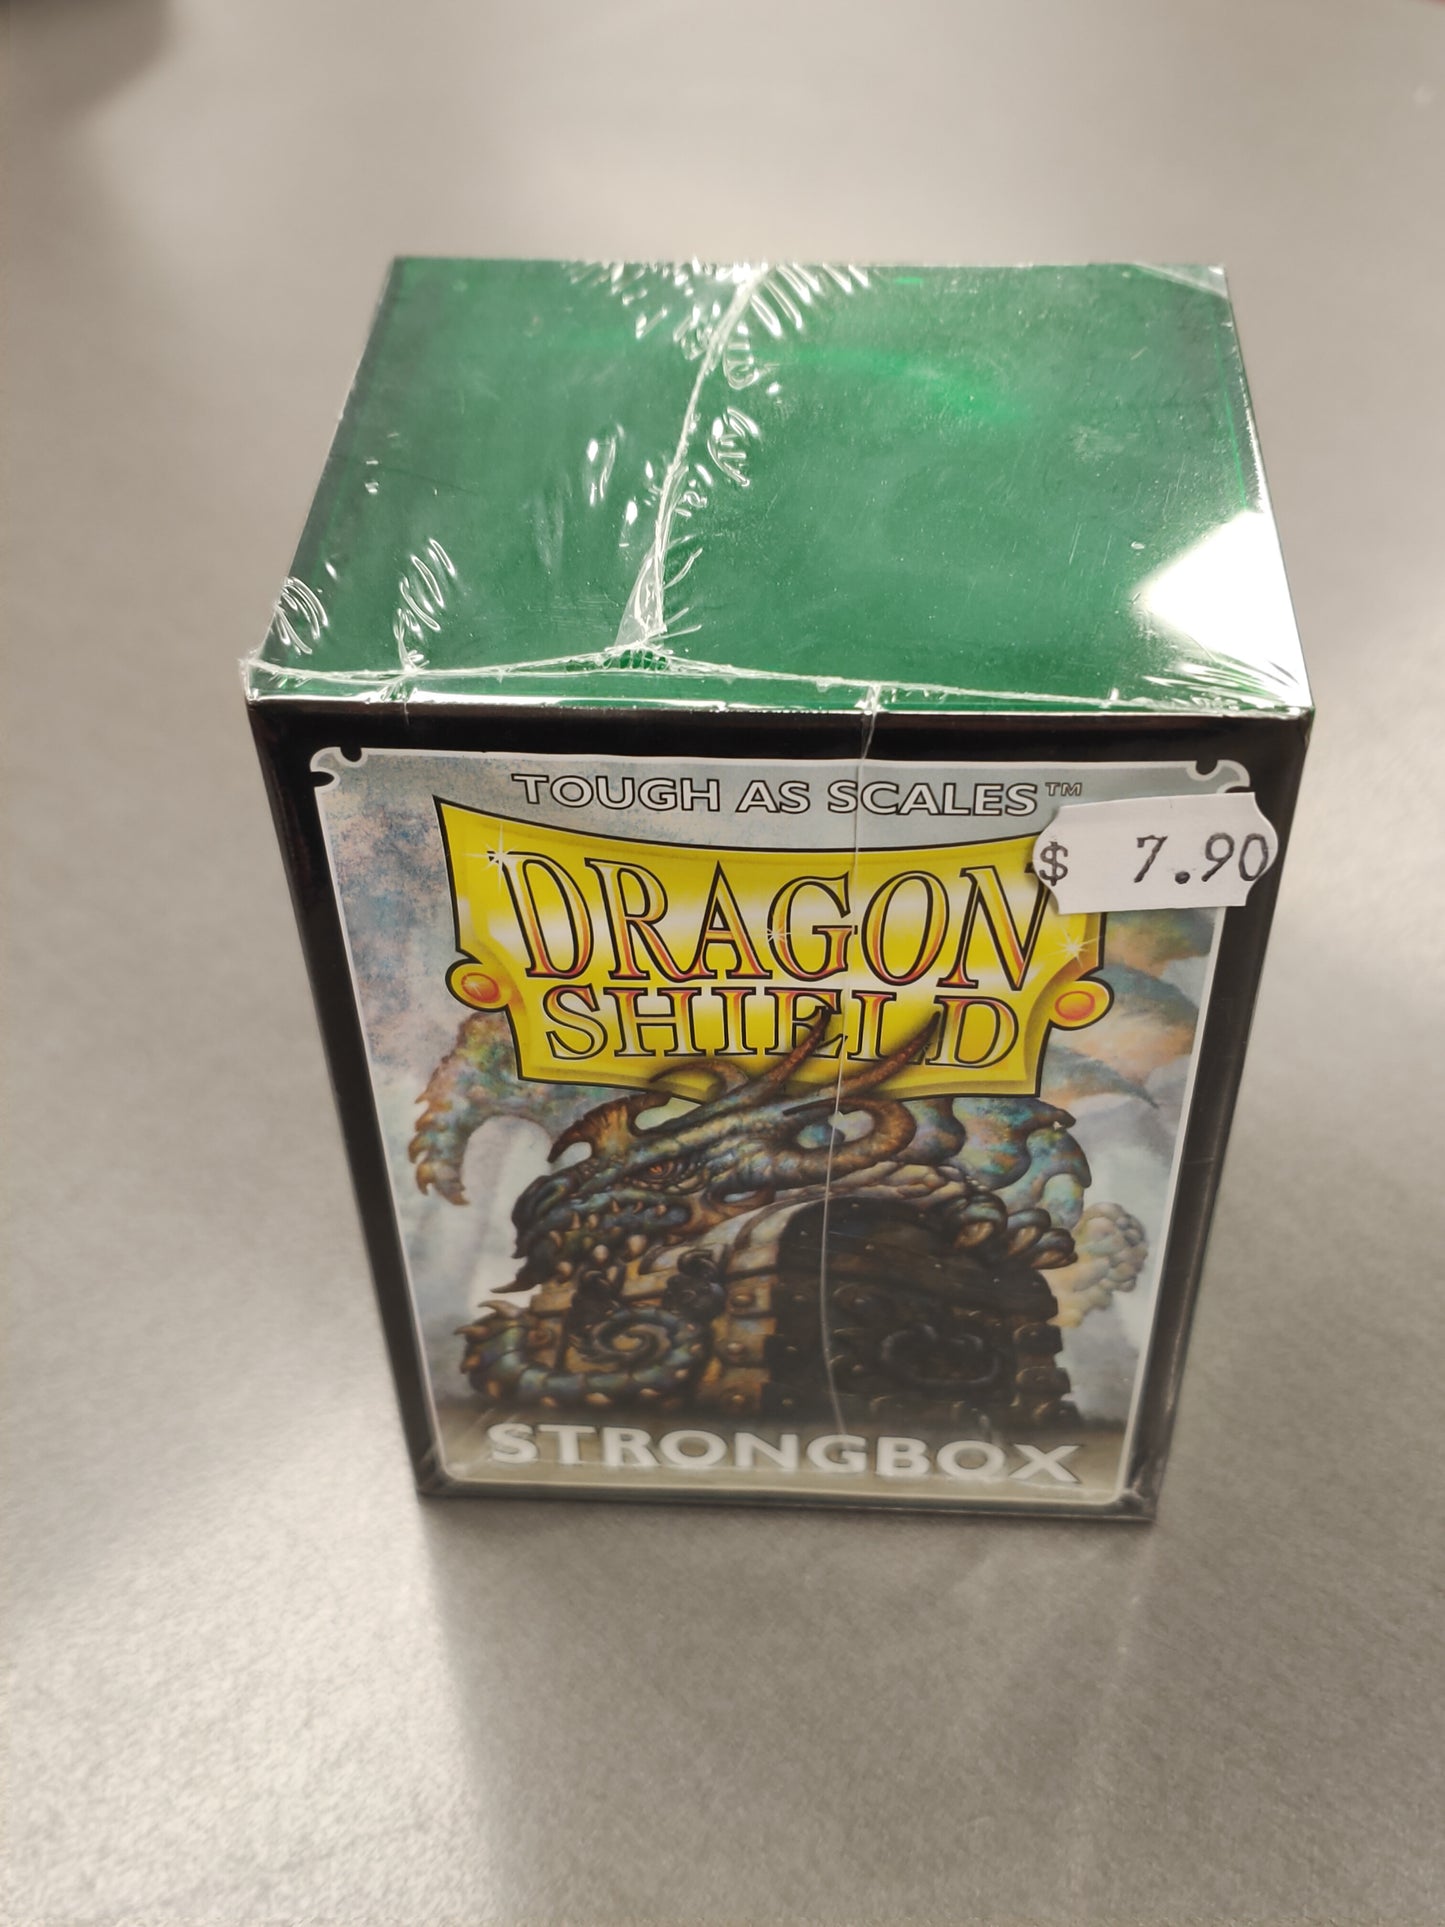 DRAGON SHIELD STRONGBOX - GREEN